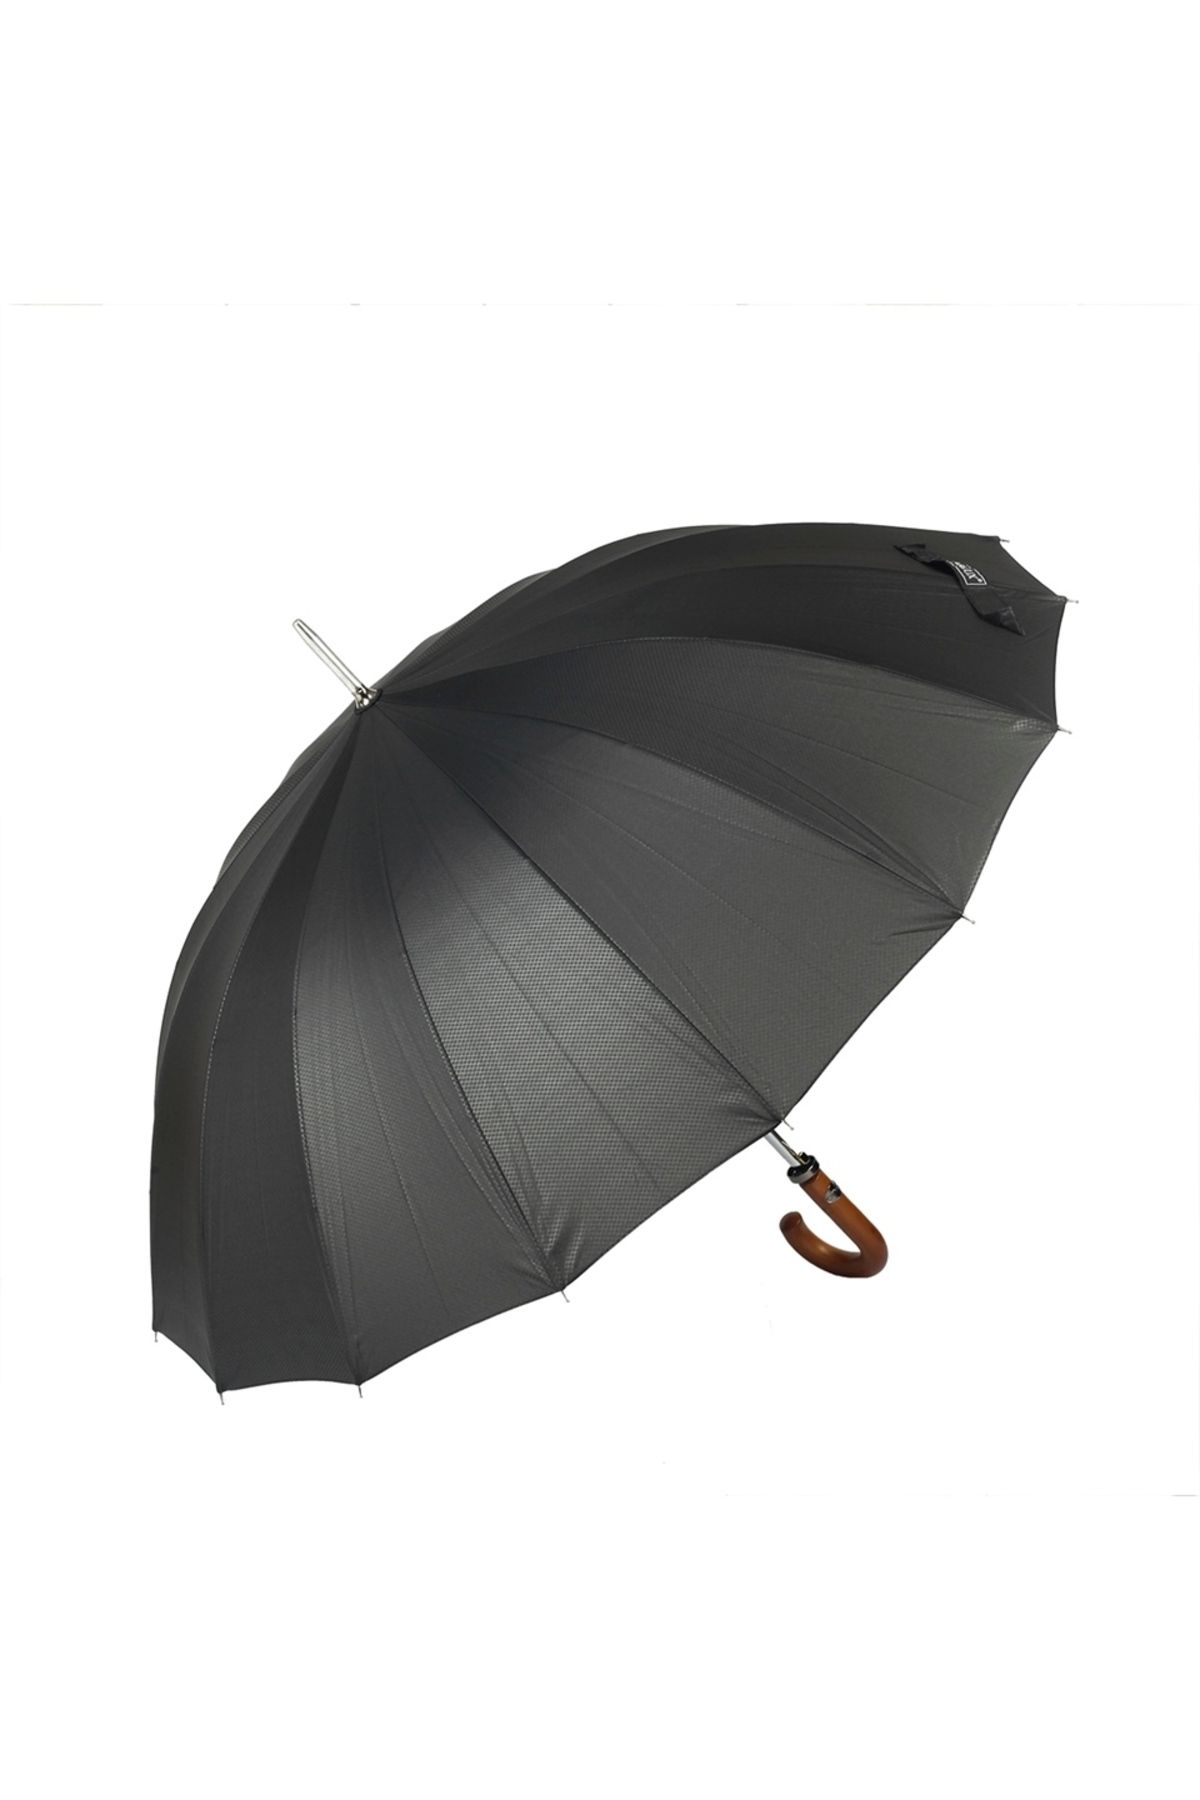 Marlux Siyah Desen Ahşap Saplı 16 Çelik Telli Premium Lüks Erkek Baston Şemsiye M21marmpr1025r003